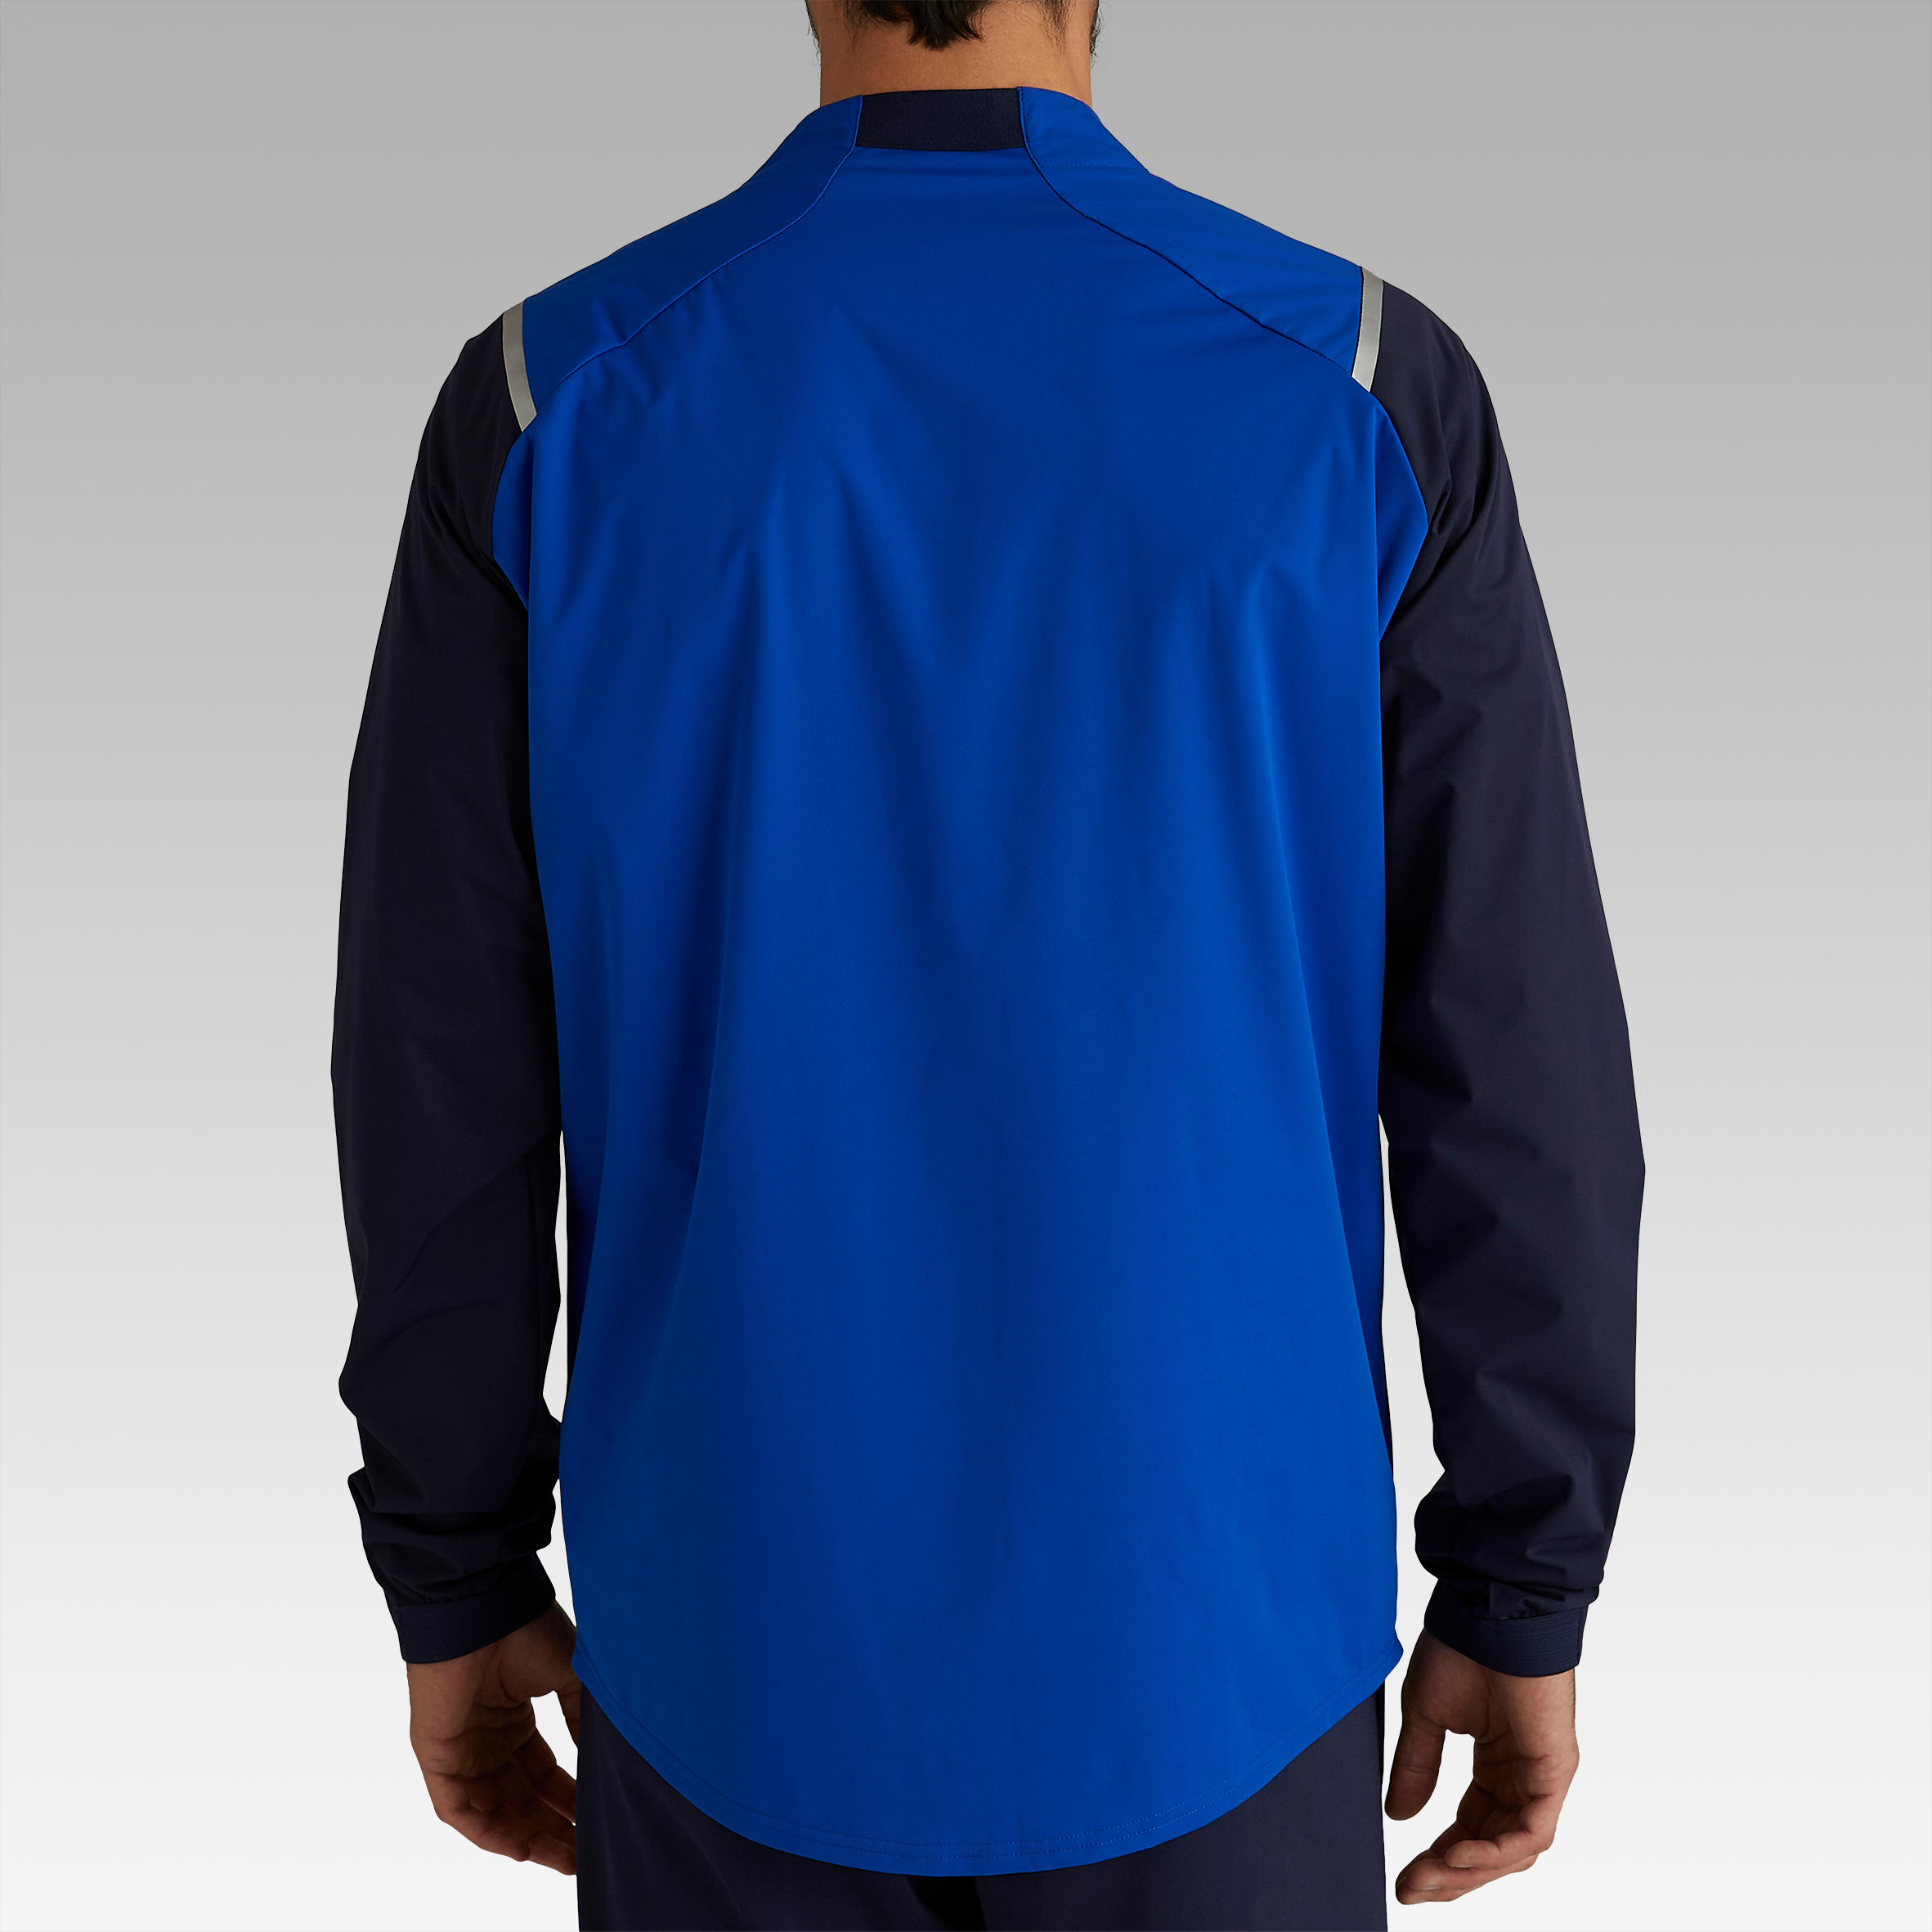 T500 Adult Waterproof Windproof Football Jacket - Blue 4/10